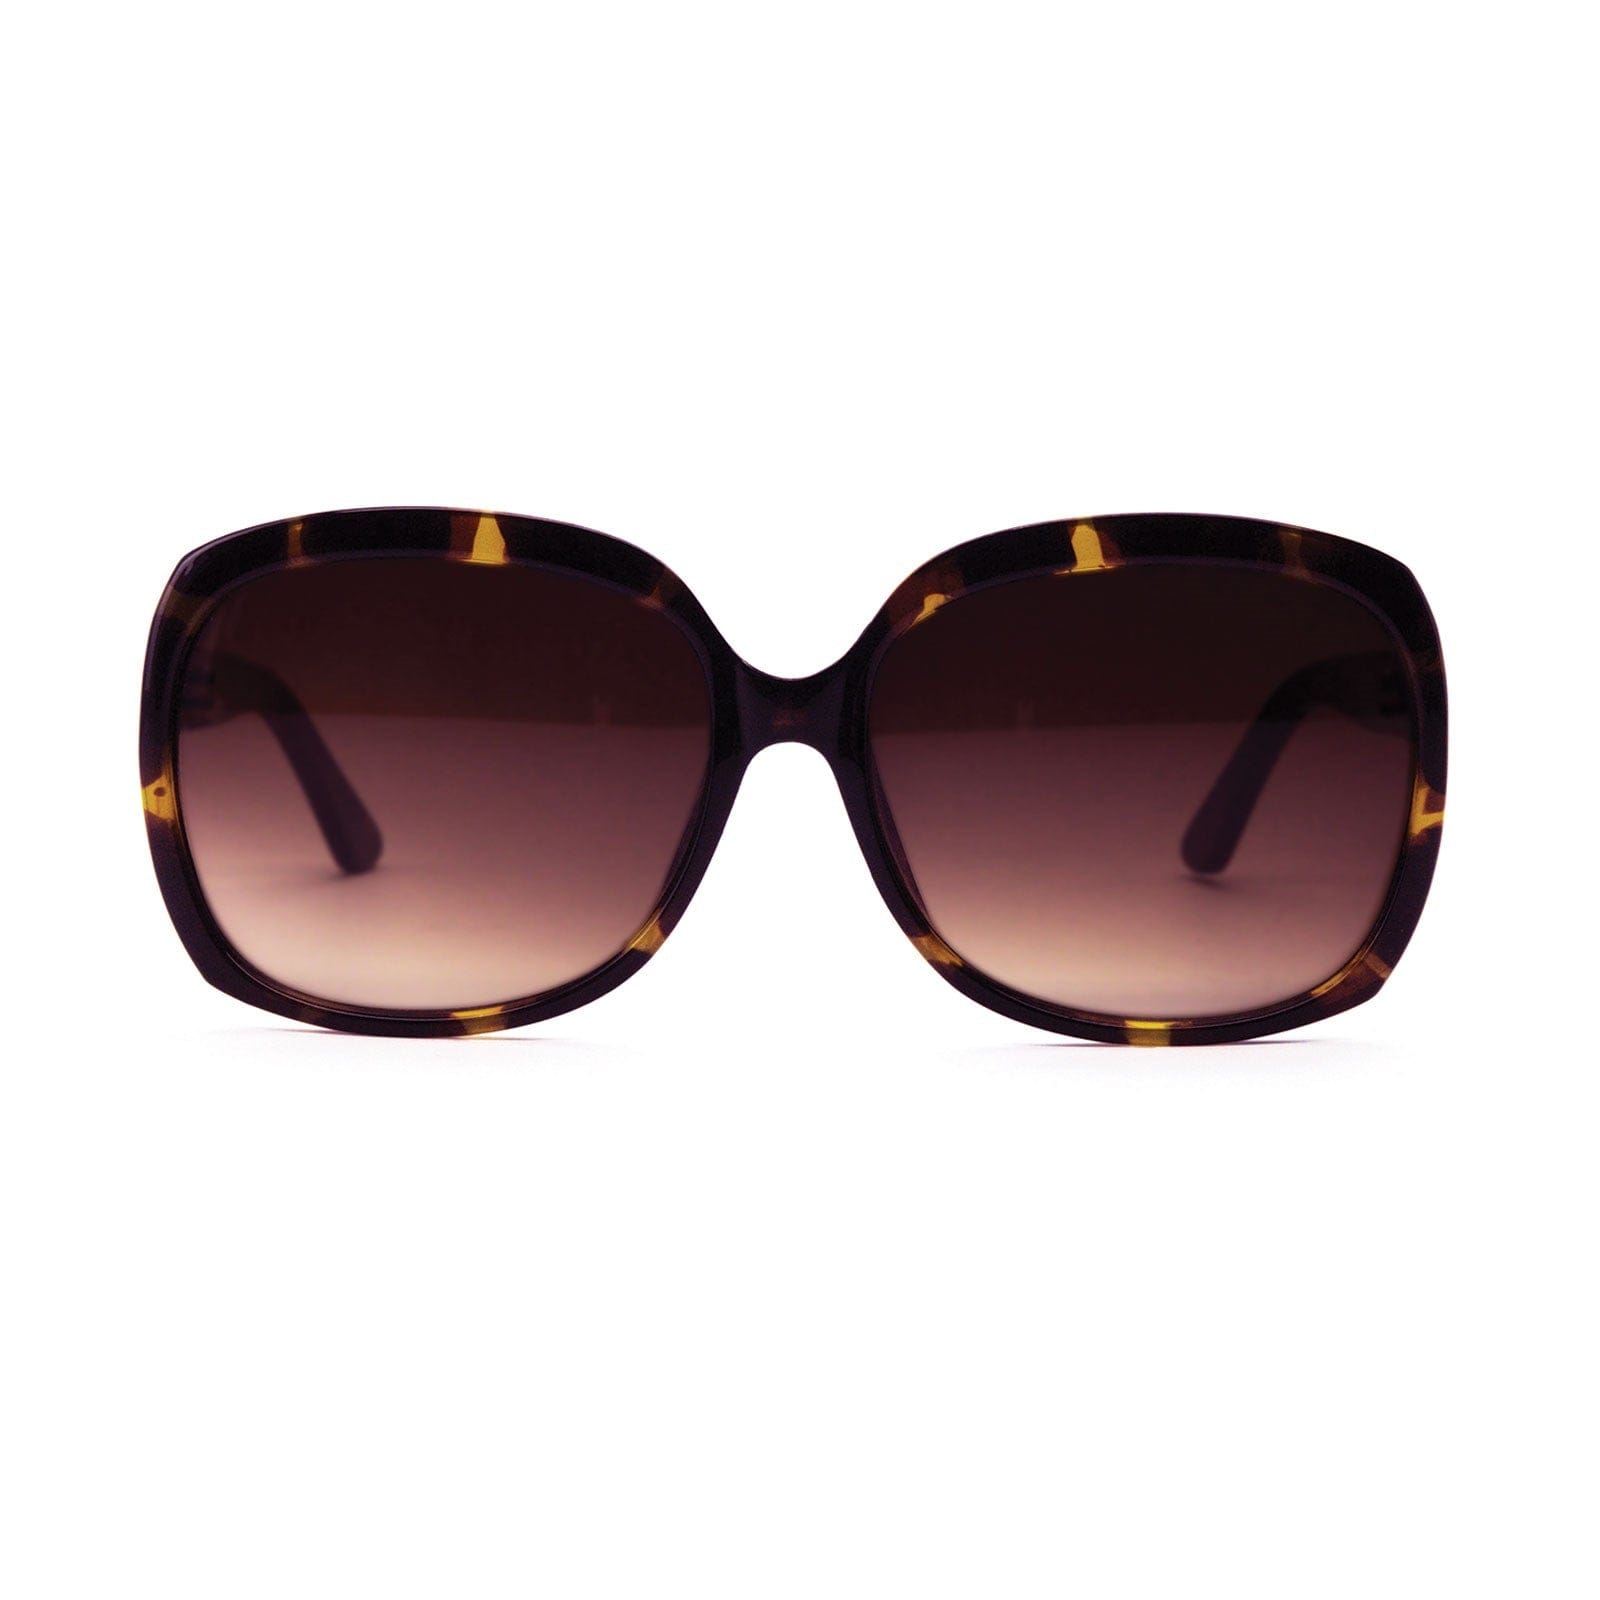 Optimum Optical Sunglasses-Magnolia/Basic Beach - Infinity Raine